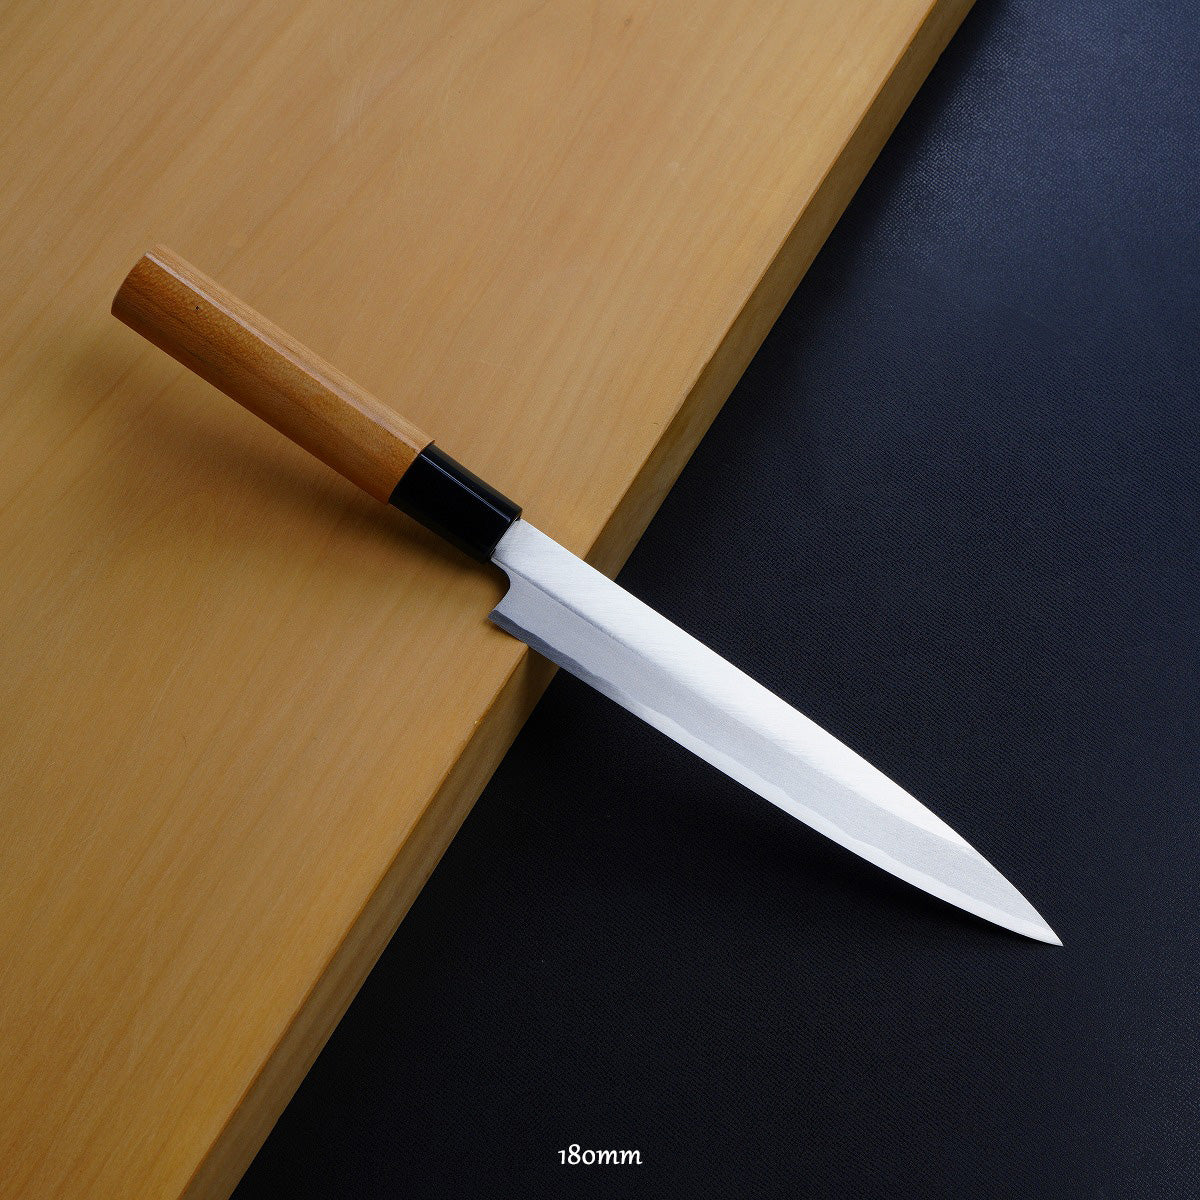 "HONMAMON" Sashimi Knife, Aogami Steel No.2